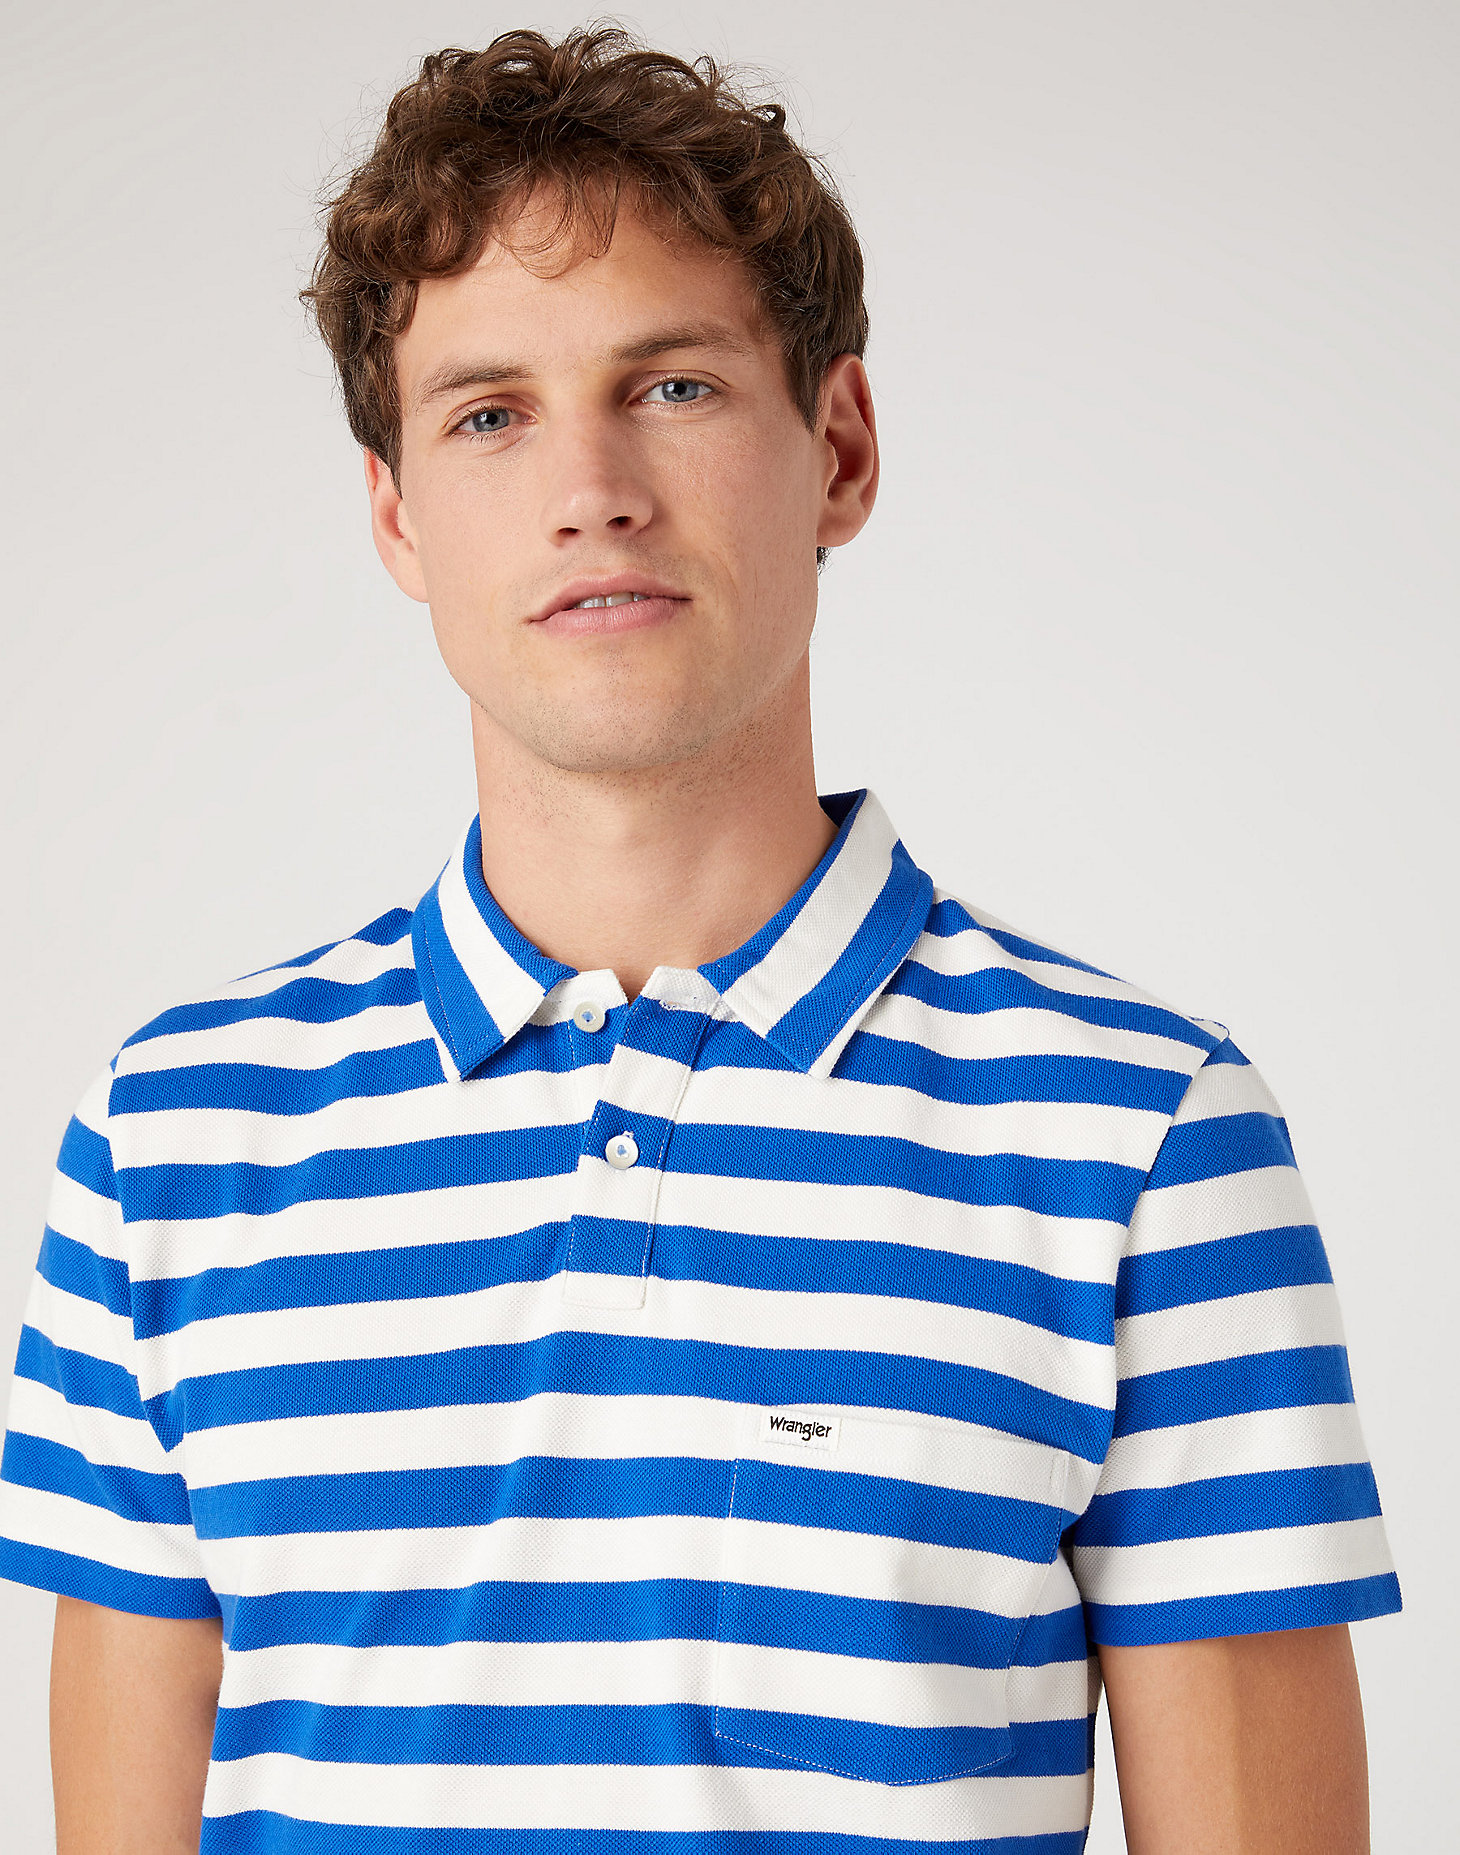 Stripe Polo Shirt in Wrangler Blue alternative view 3